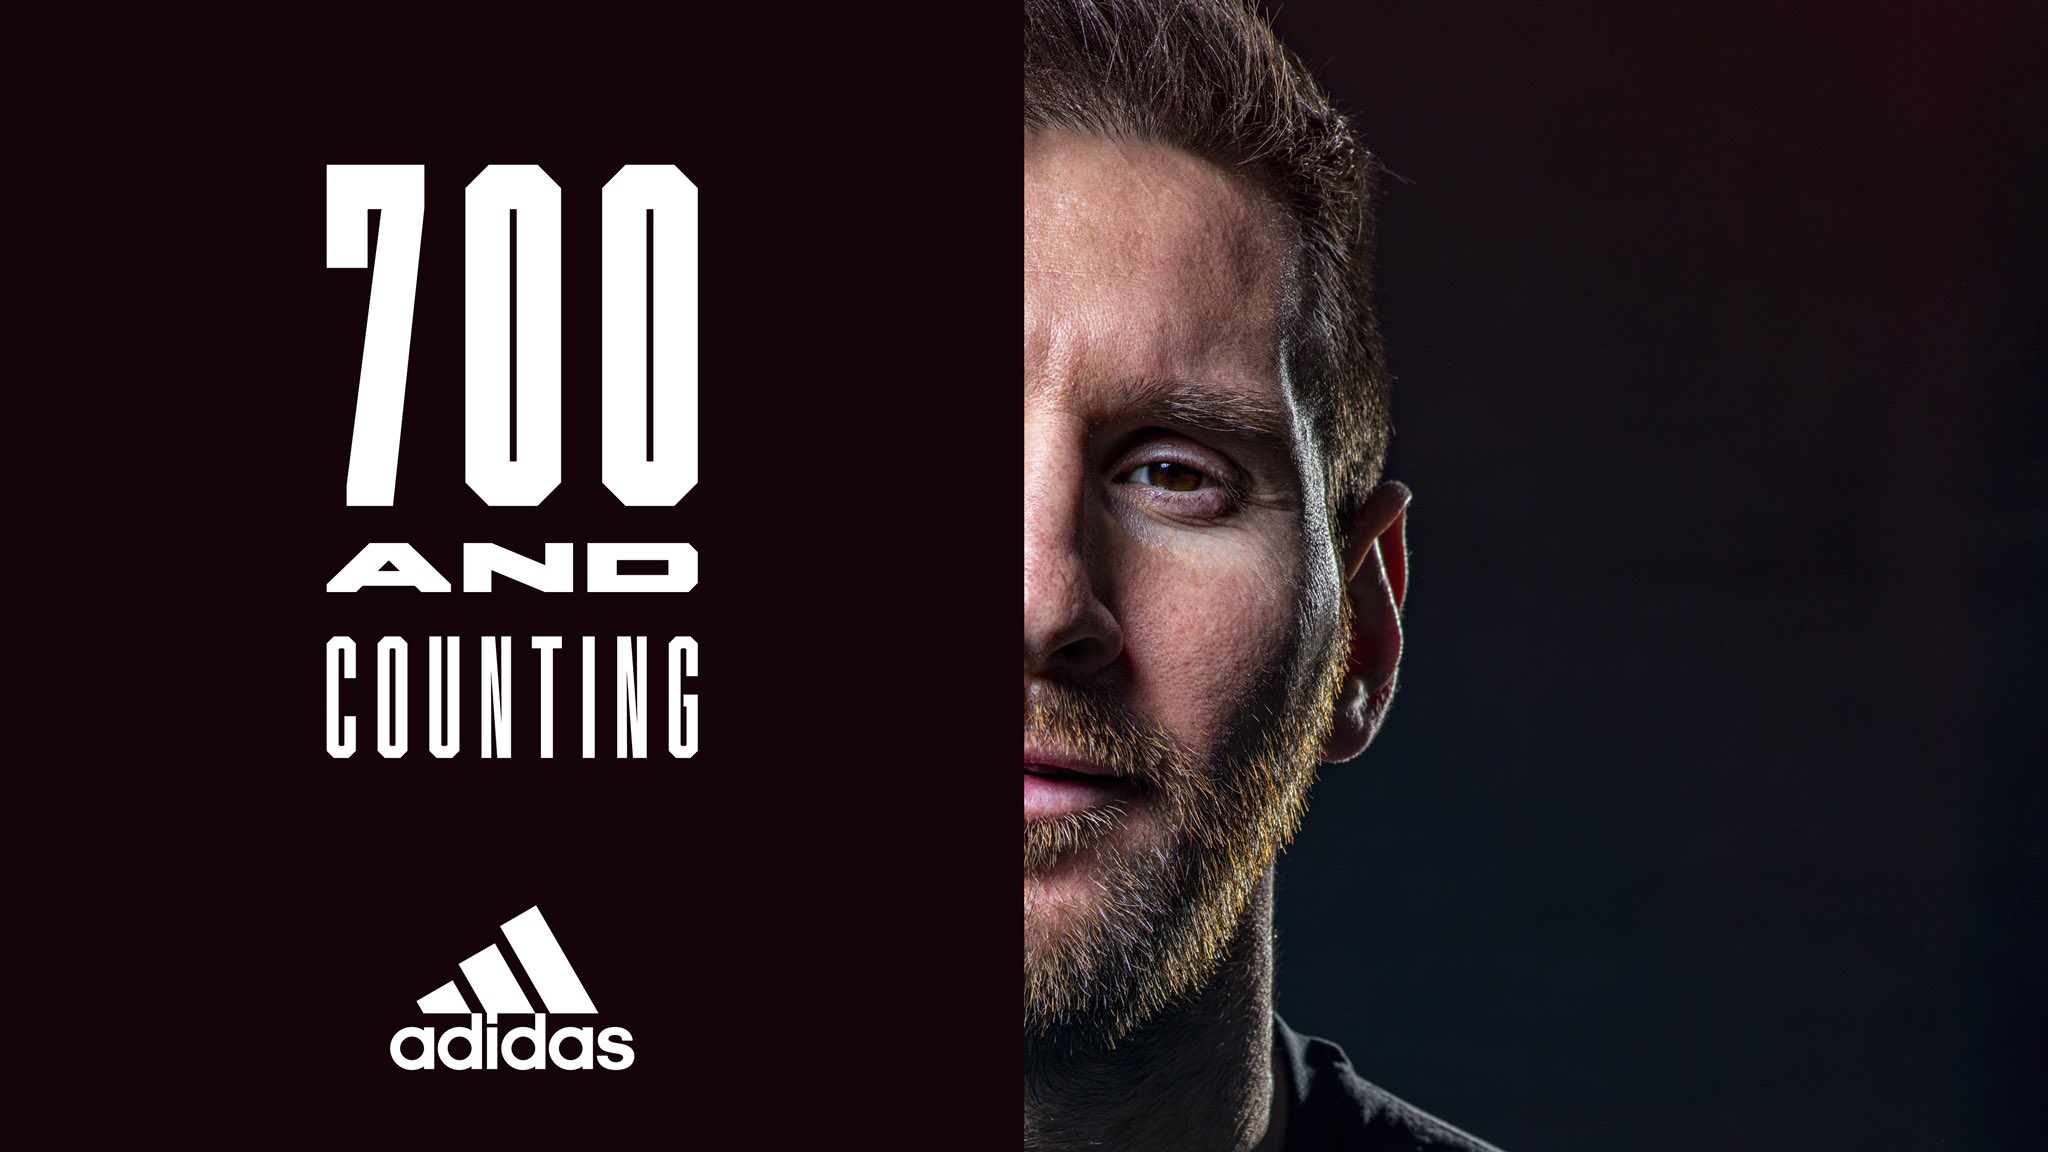 Bliksem draadloos overschot adidas Football on Twitter: "700 career goals, Leo Messi 🏆  https://t.co/9OBH28Ifw2" / Twitter